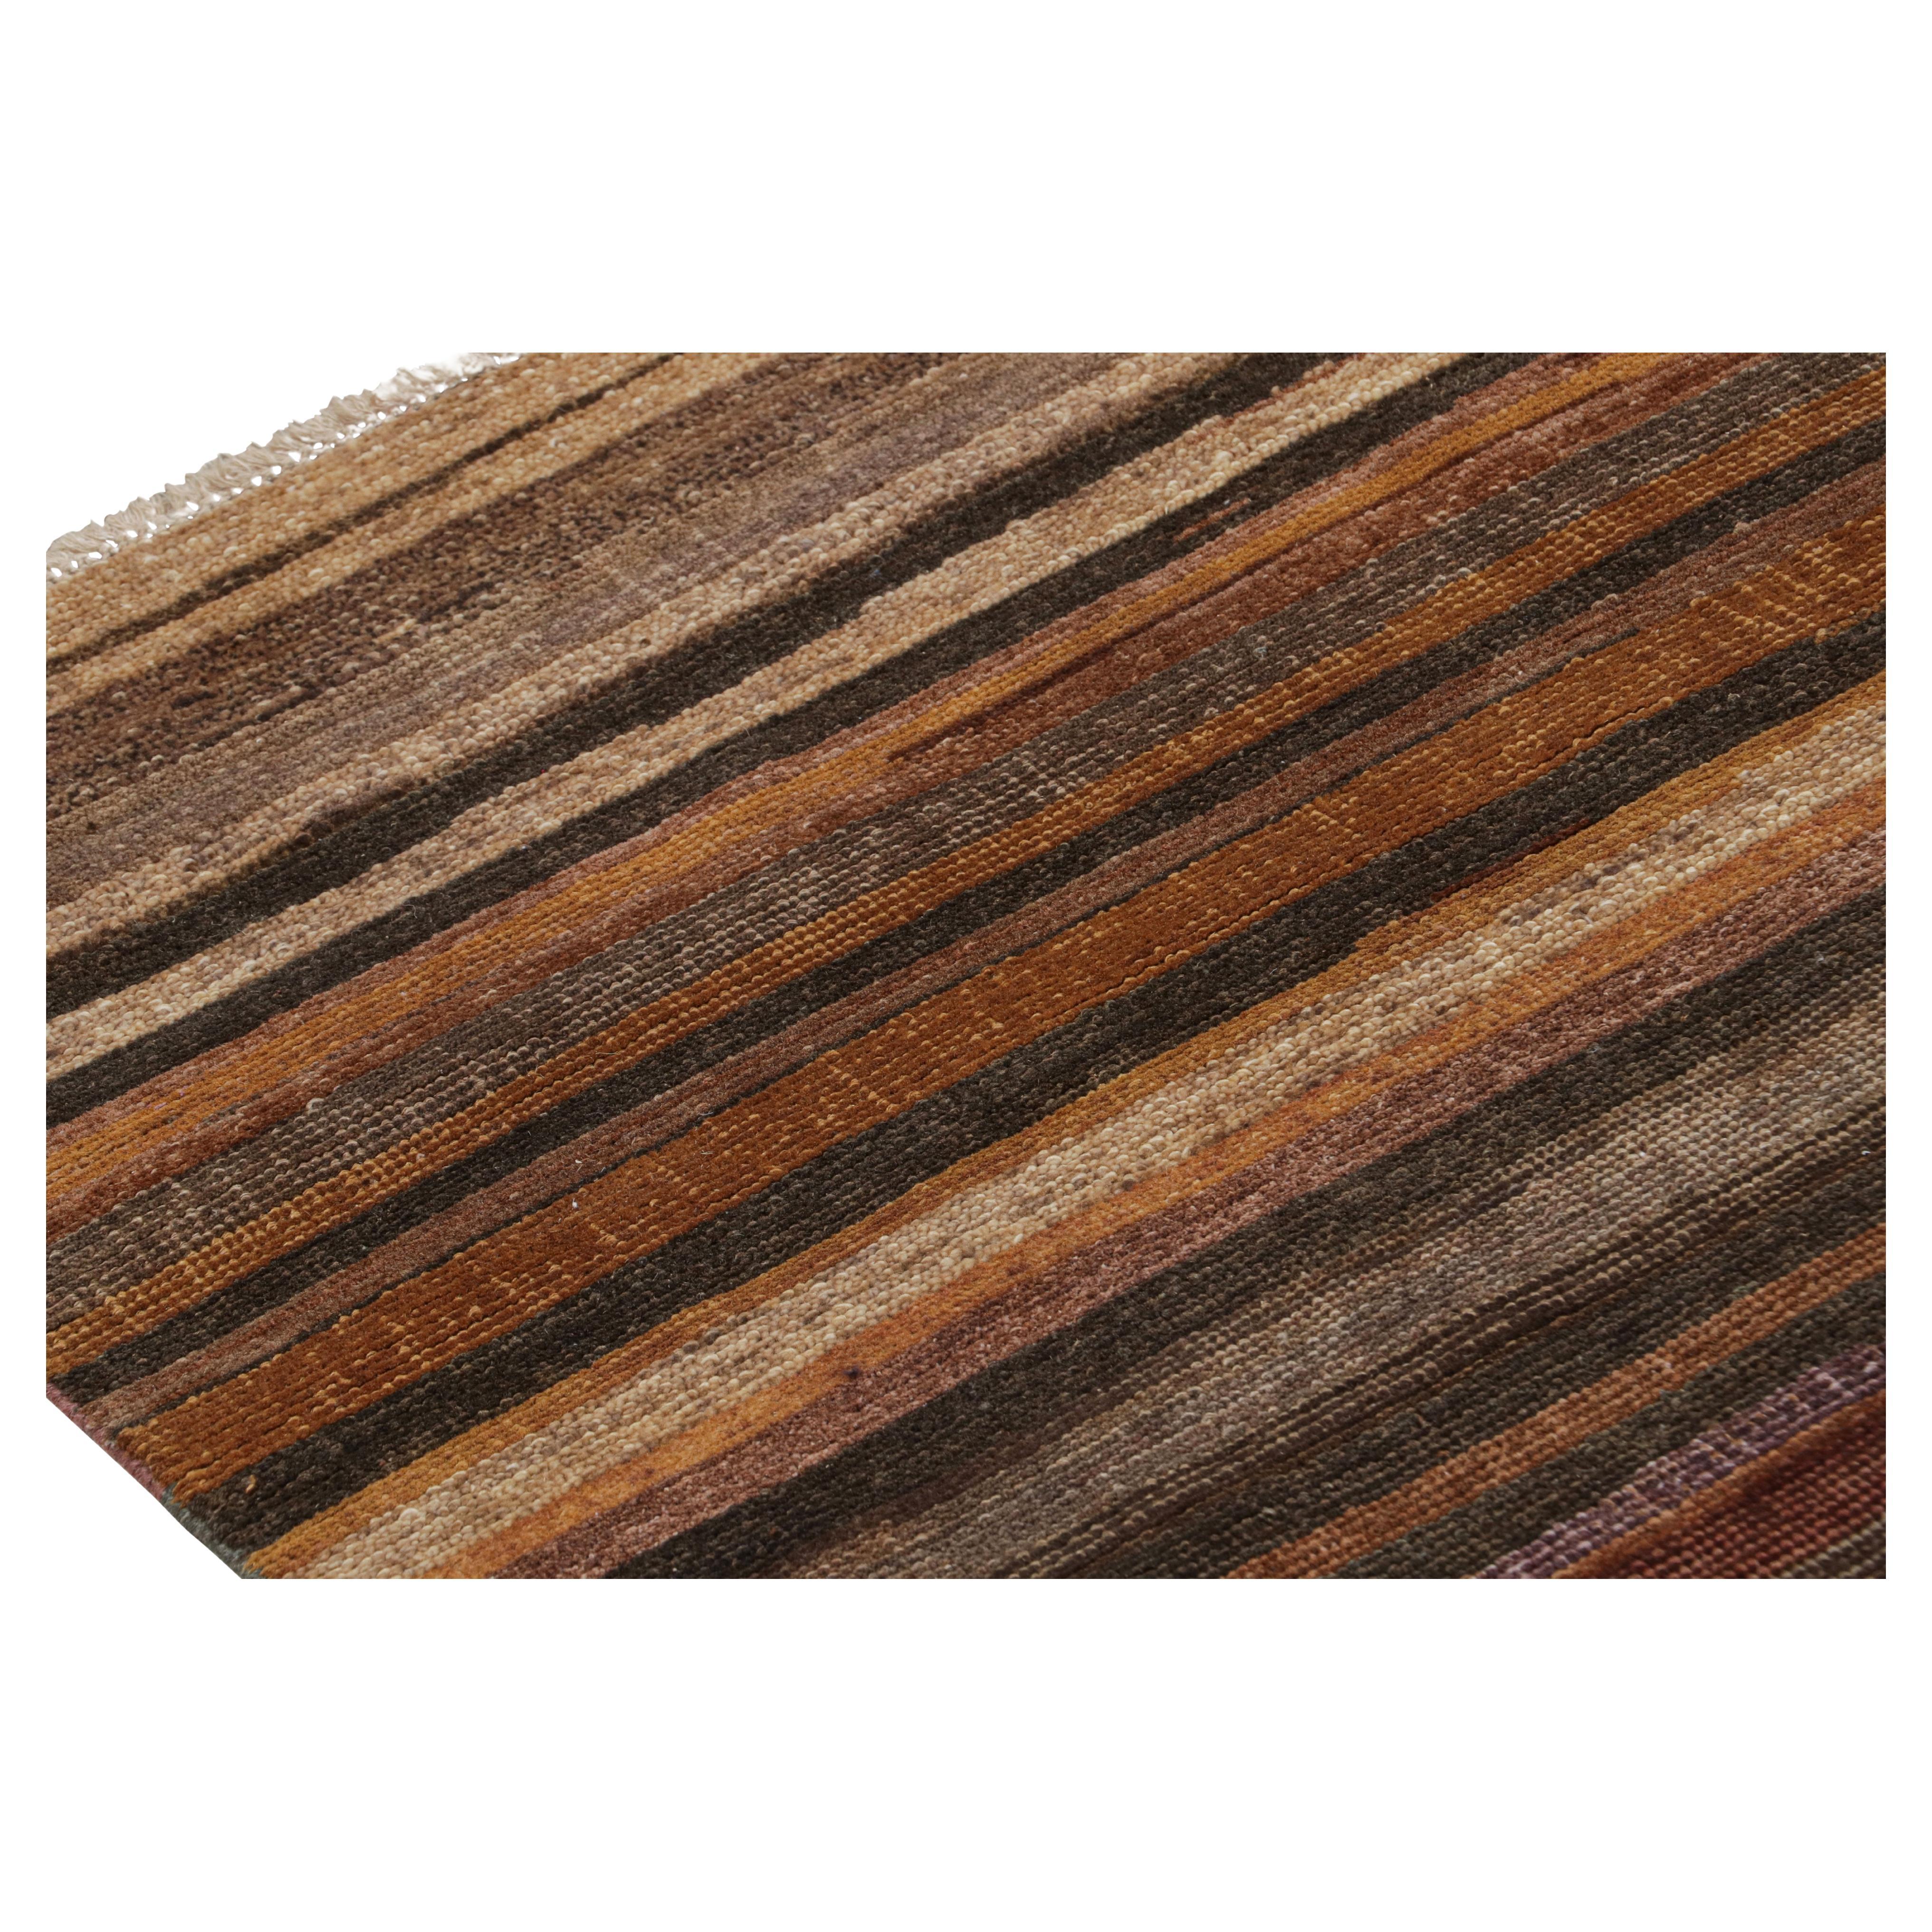 Rug & Kilim's Textural Rug in Beige-Brown Stripes and Striae (tapis texturé à rayures beige et marron)